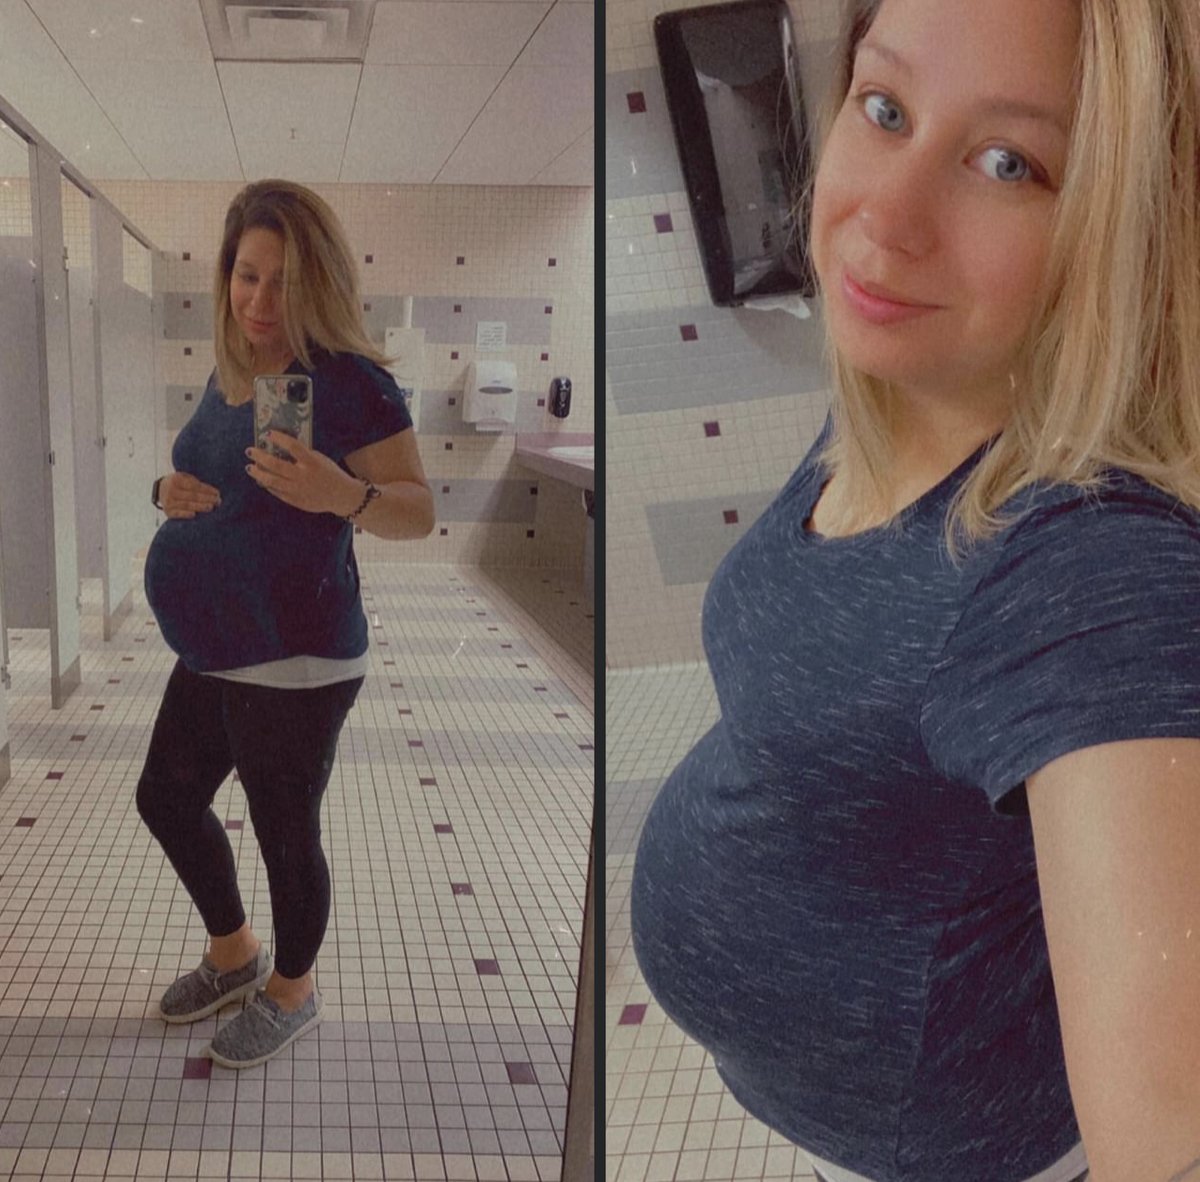 GC Laura is rocking that bump!

#Ivfgotthis #embryotransfer #intendedparents #surrogacy #surrogacyrocks #stickythoughts #babydust #family #ivf #fet #surrogate #babybump #bumpdate #hcg #progesterone #infertility #fertility